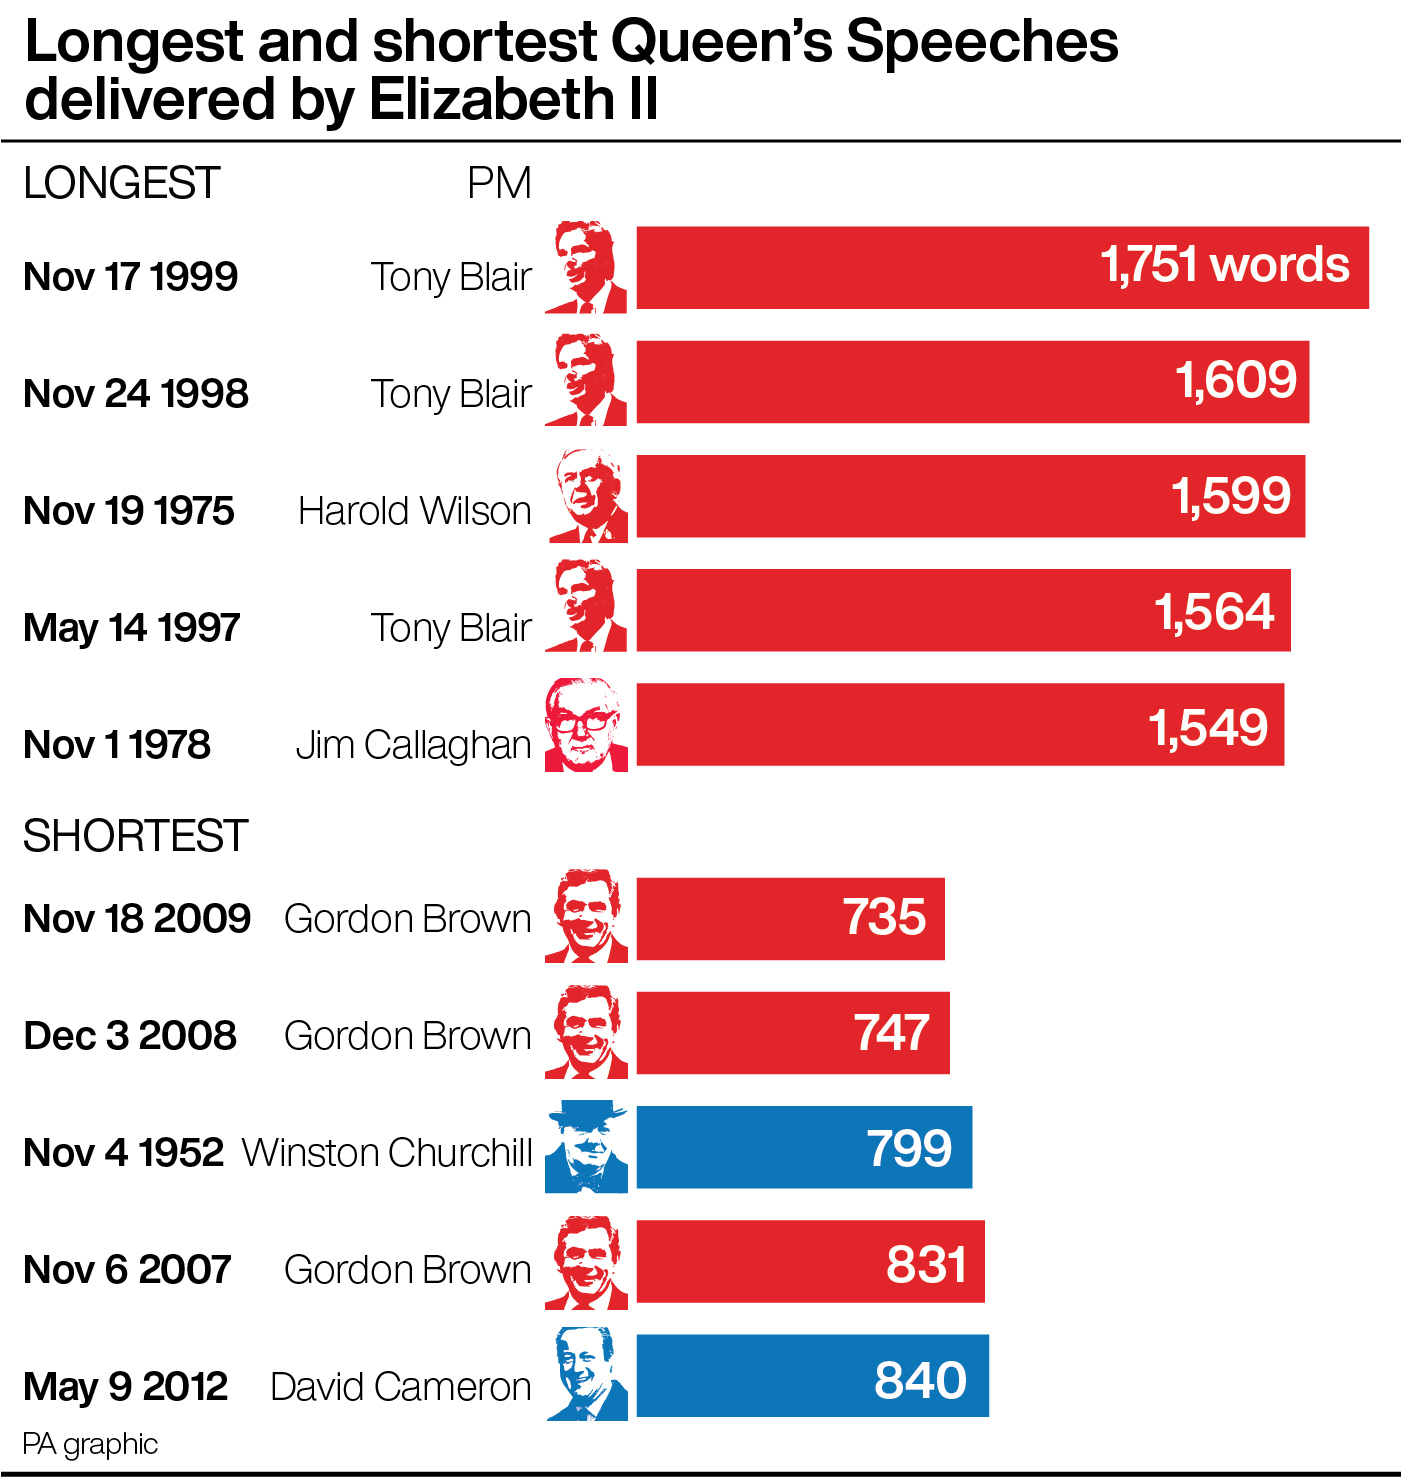 queen's speech viewing figures by year